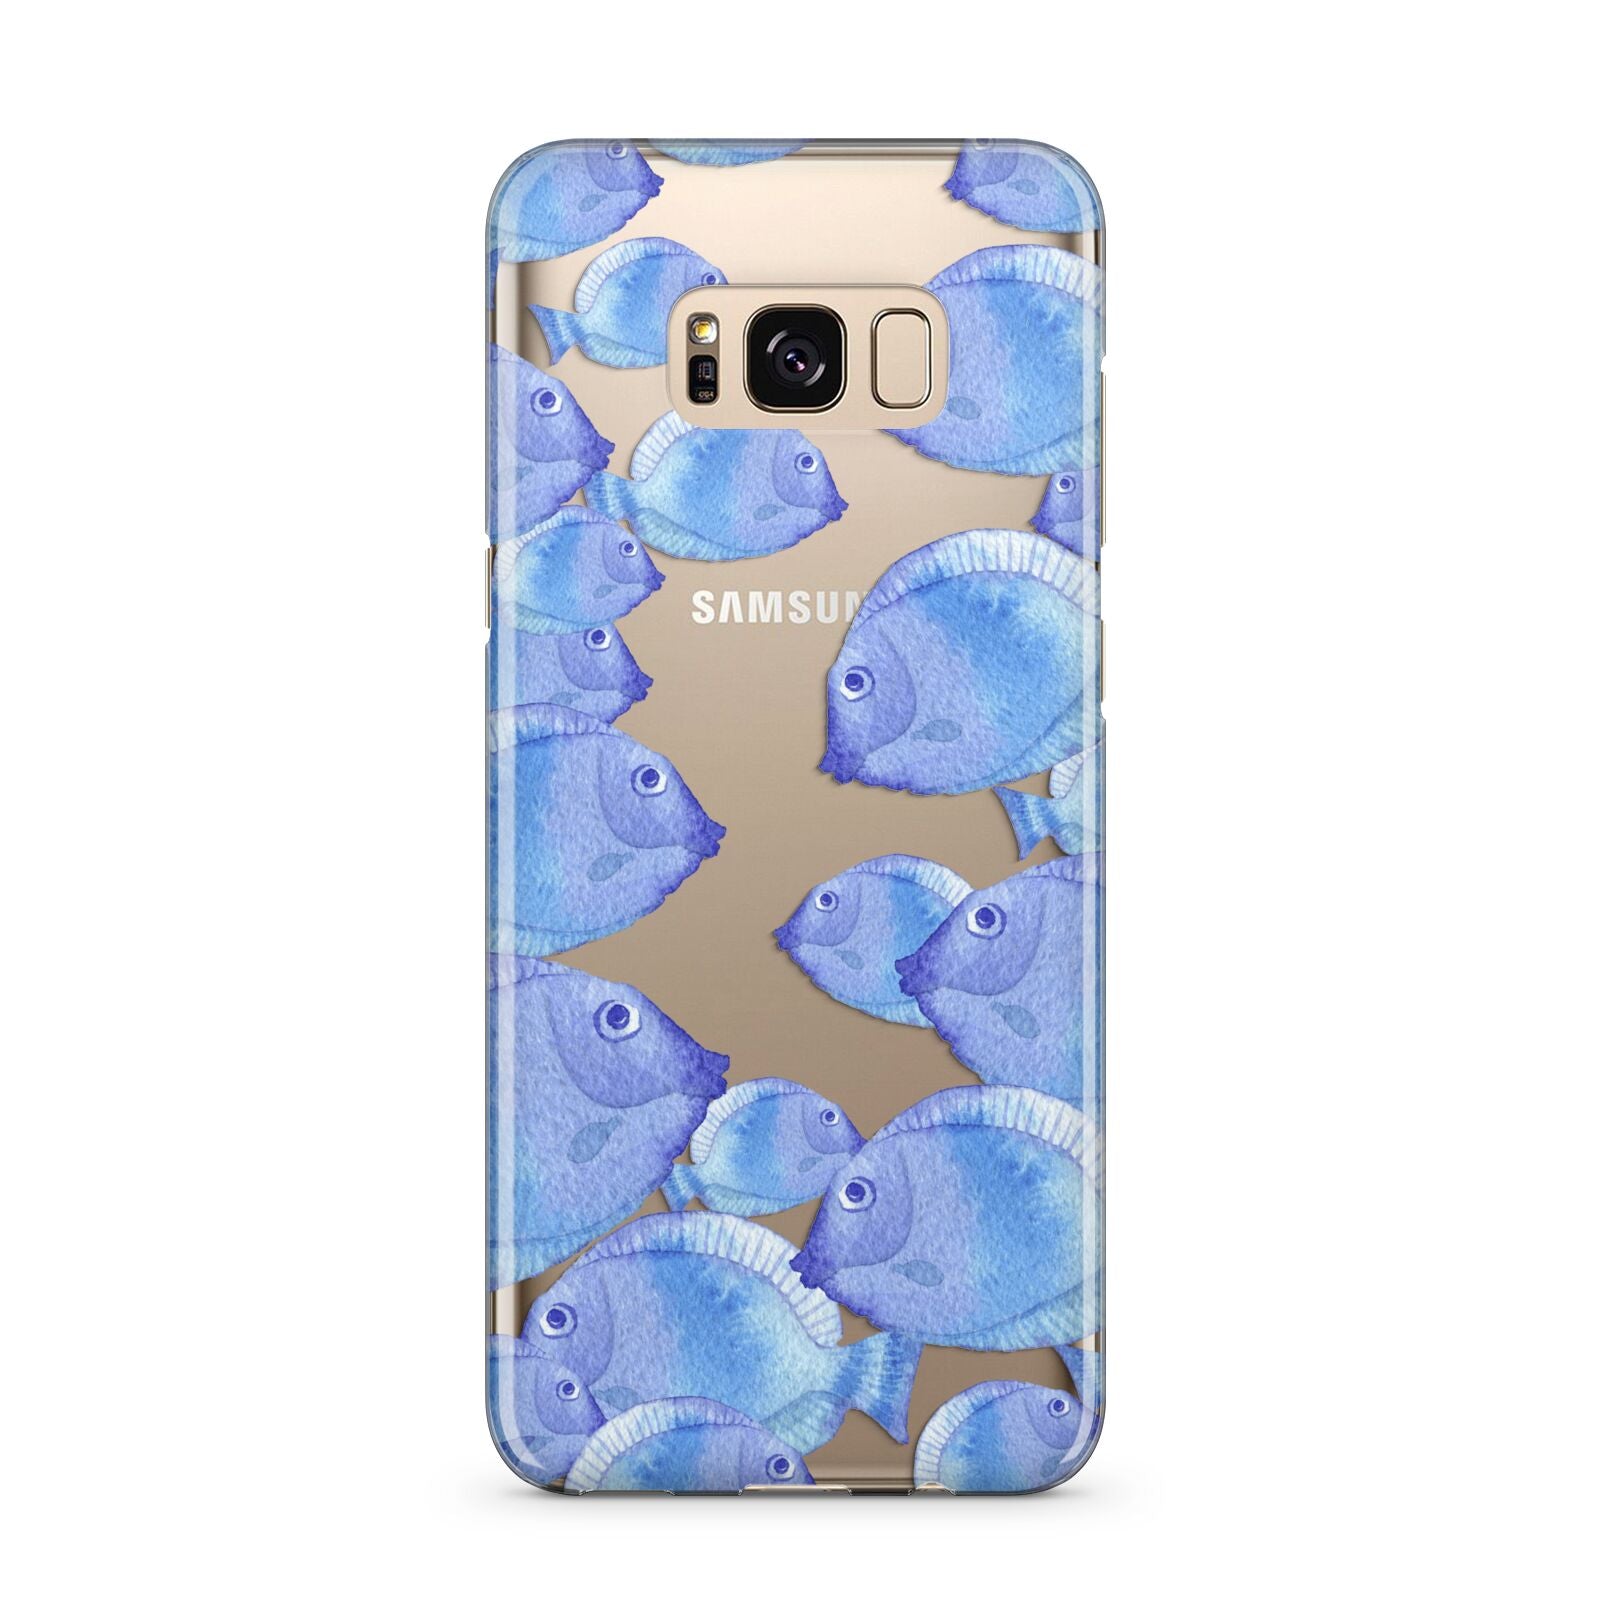 Fish Samsung Galaxy S8 Plus Case